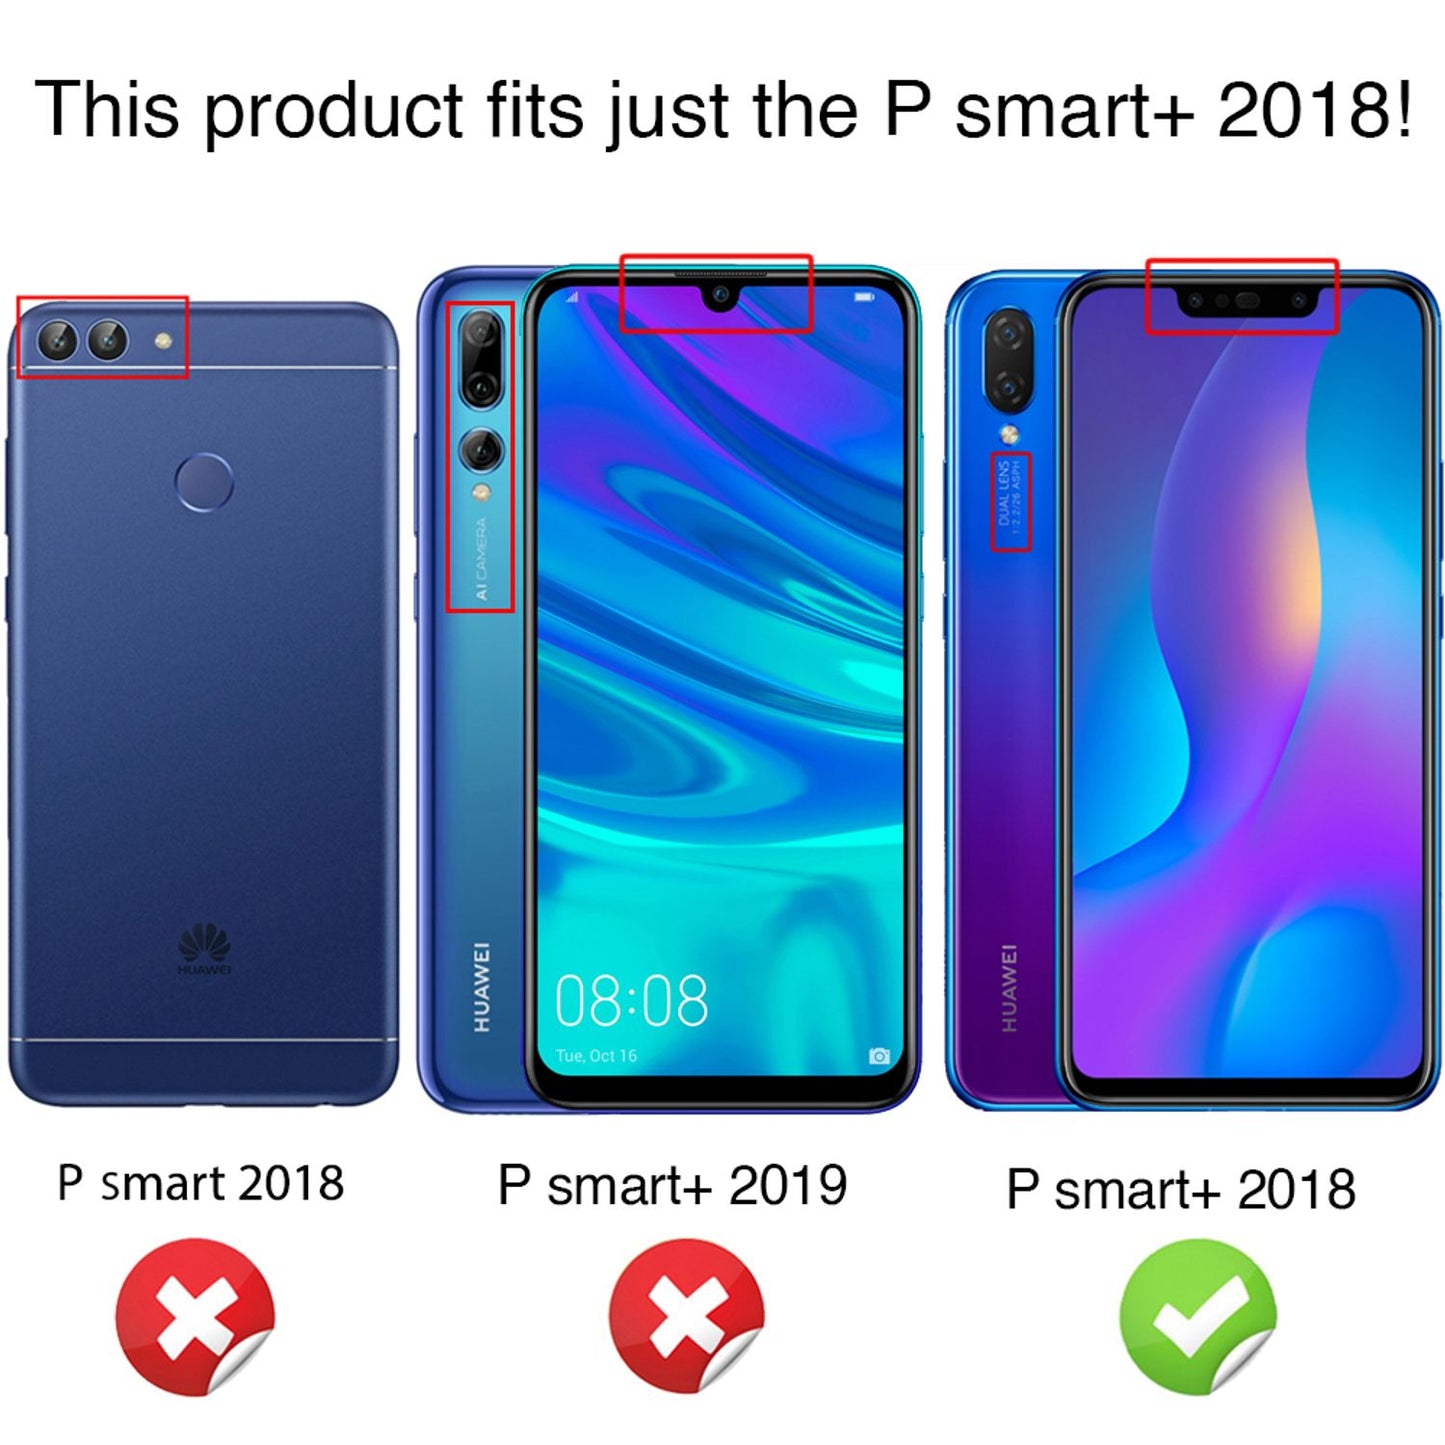 NALIA 360 Grad Handyhülle für Huawei P Smart Plus 2018, Full Cover Case Bumper